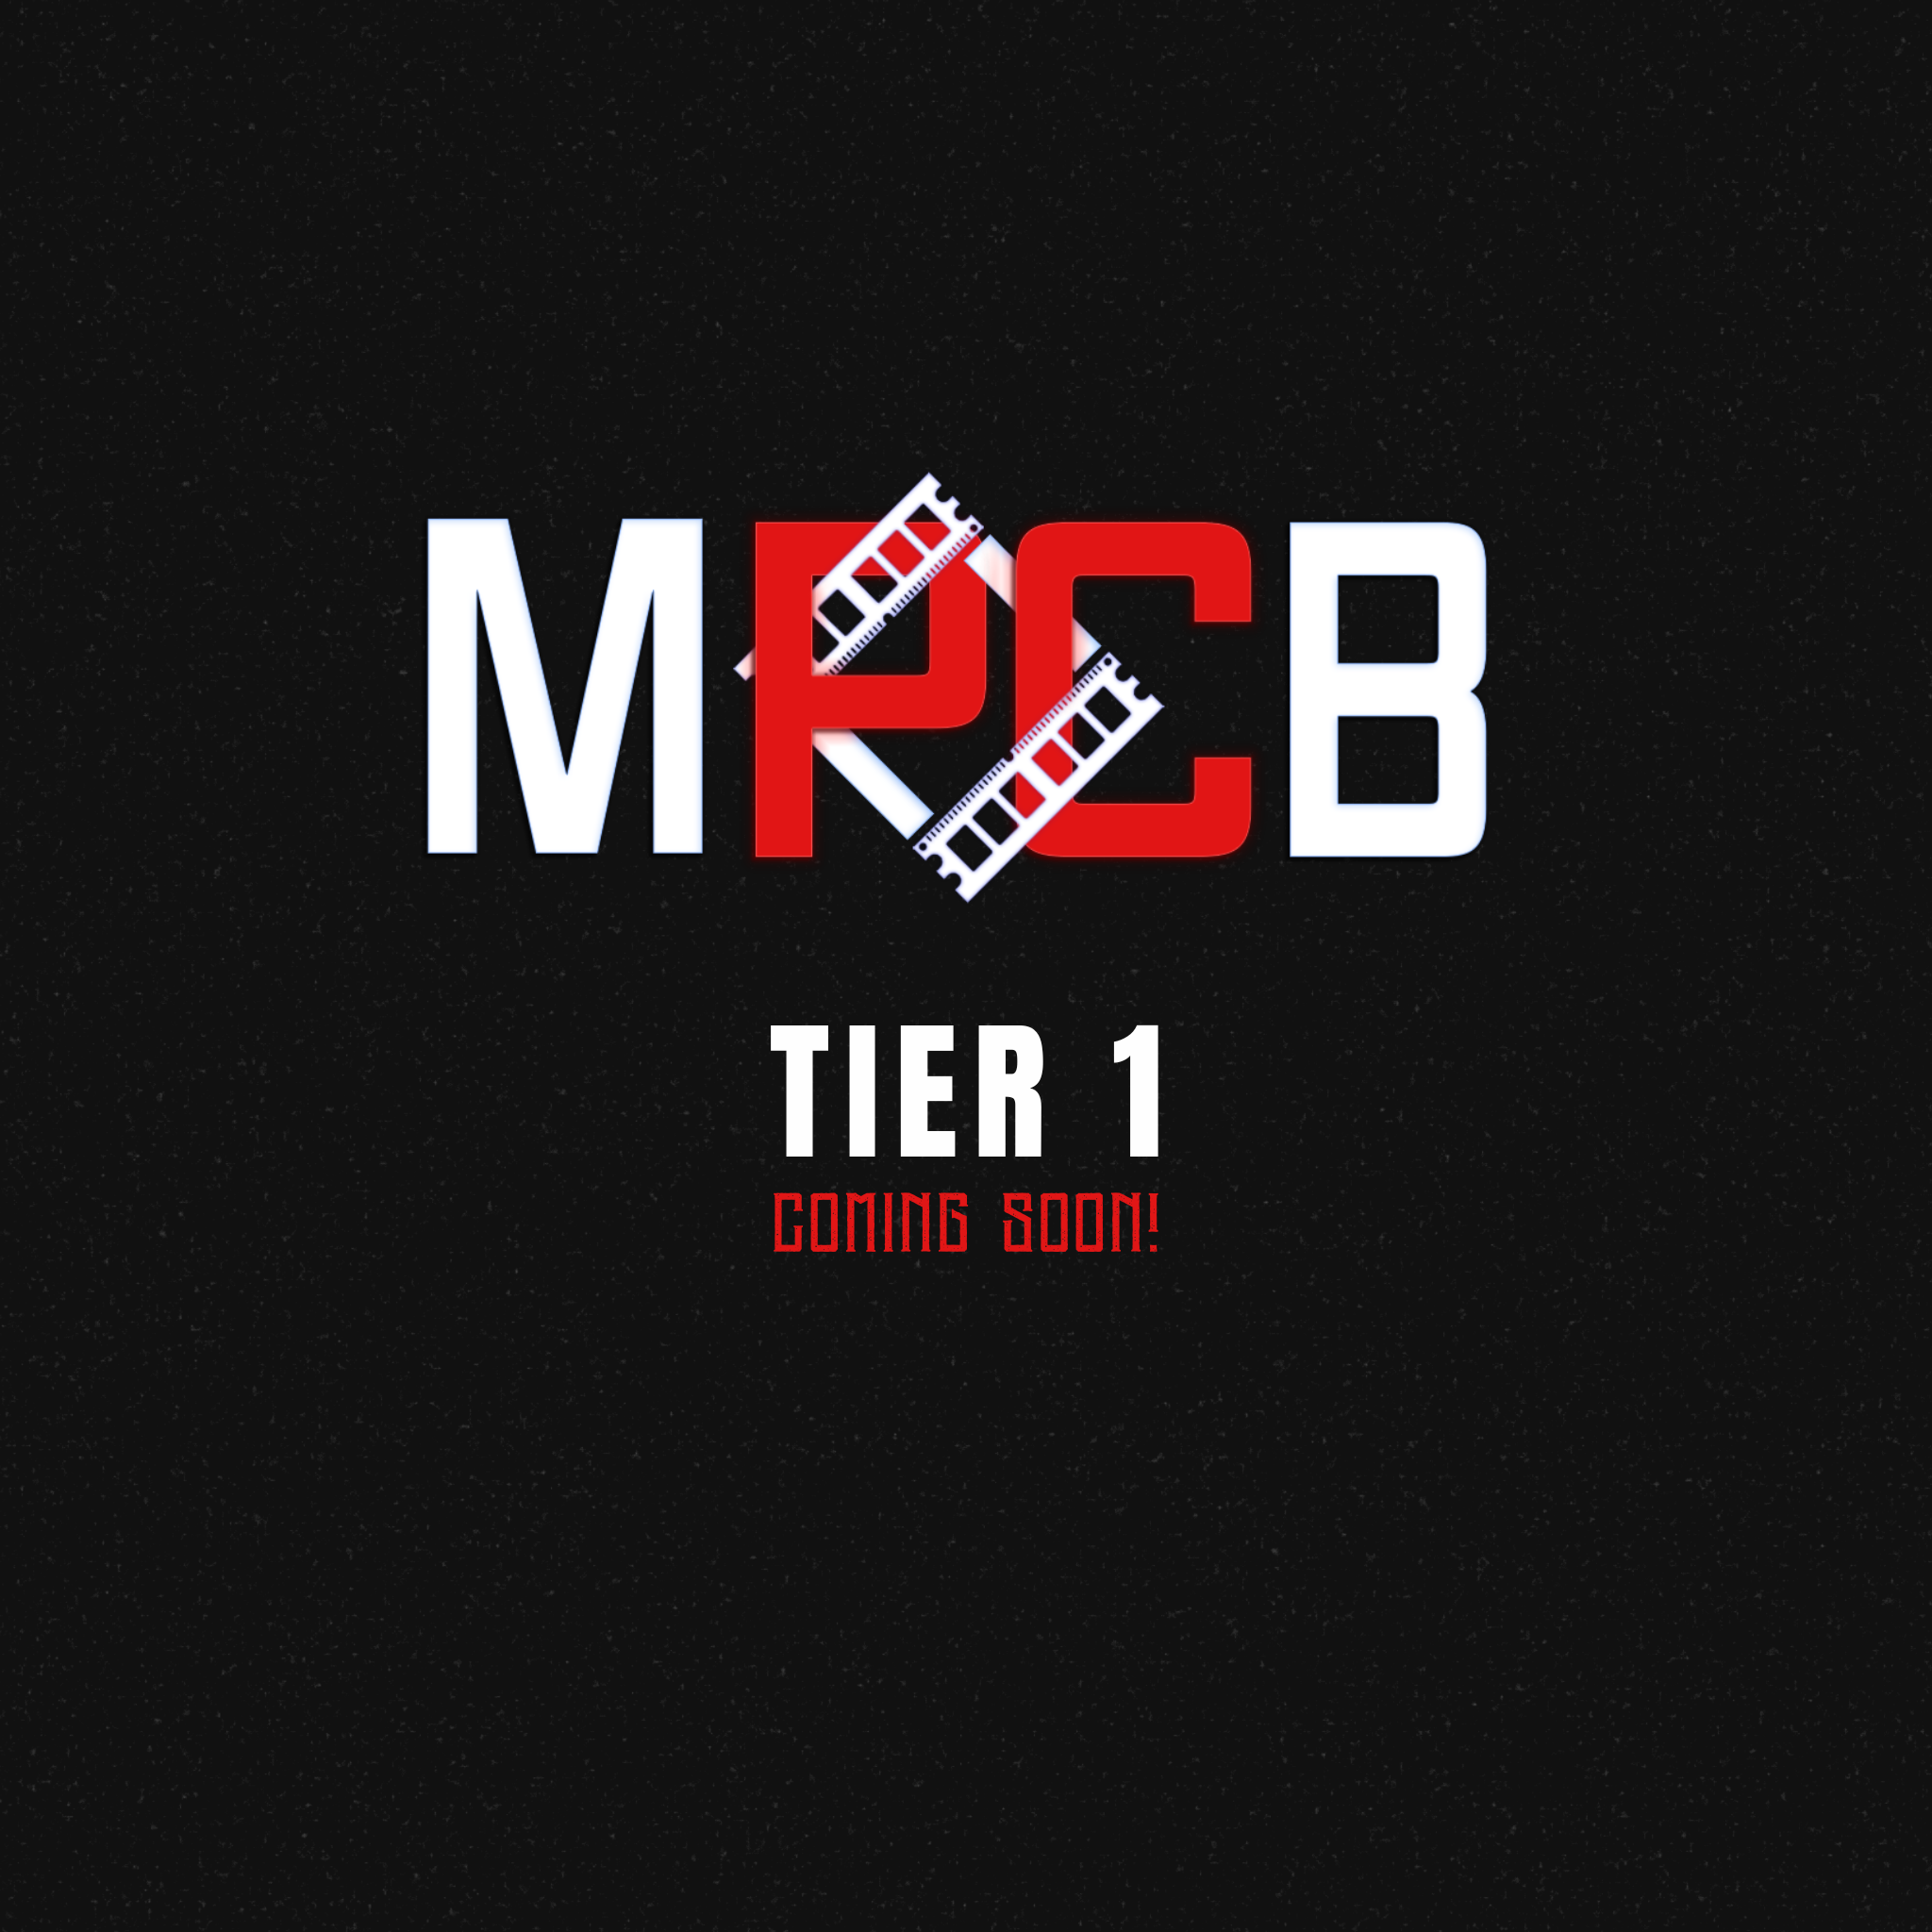 mpcb tier 1 coming soon